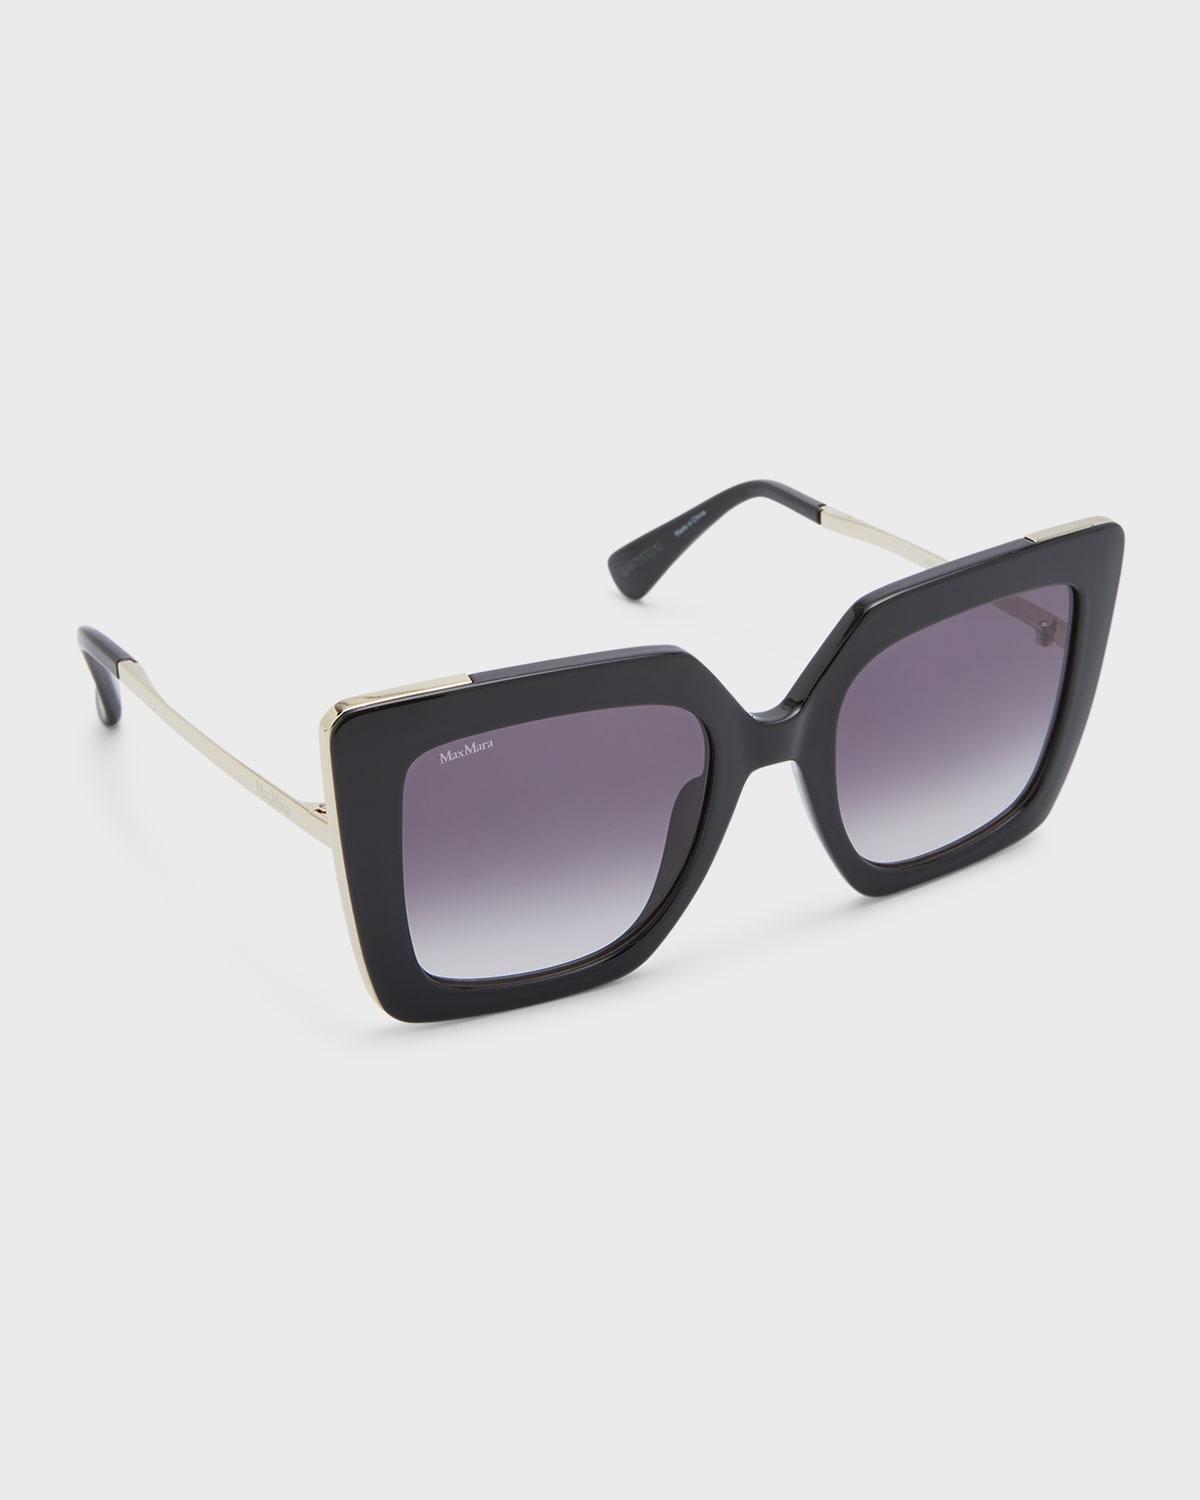 Max Mara Square Sunglasses Product Image